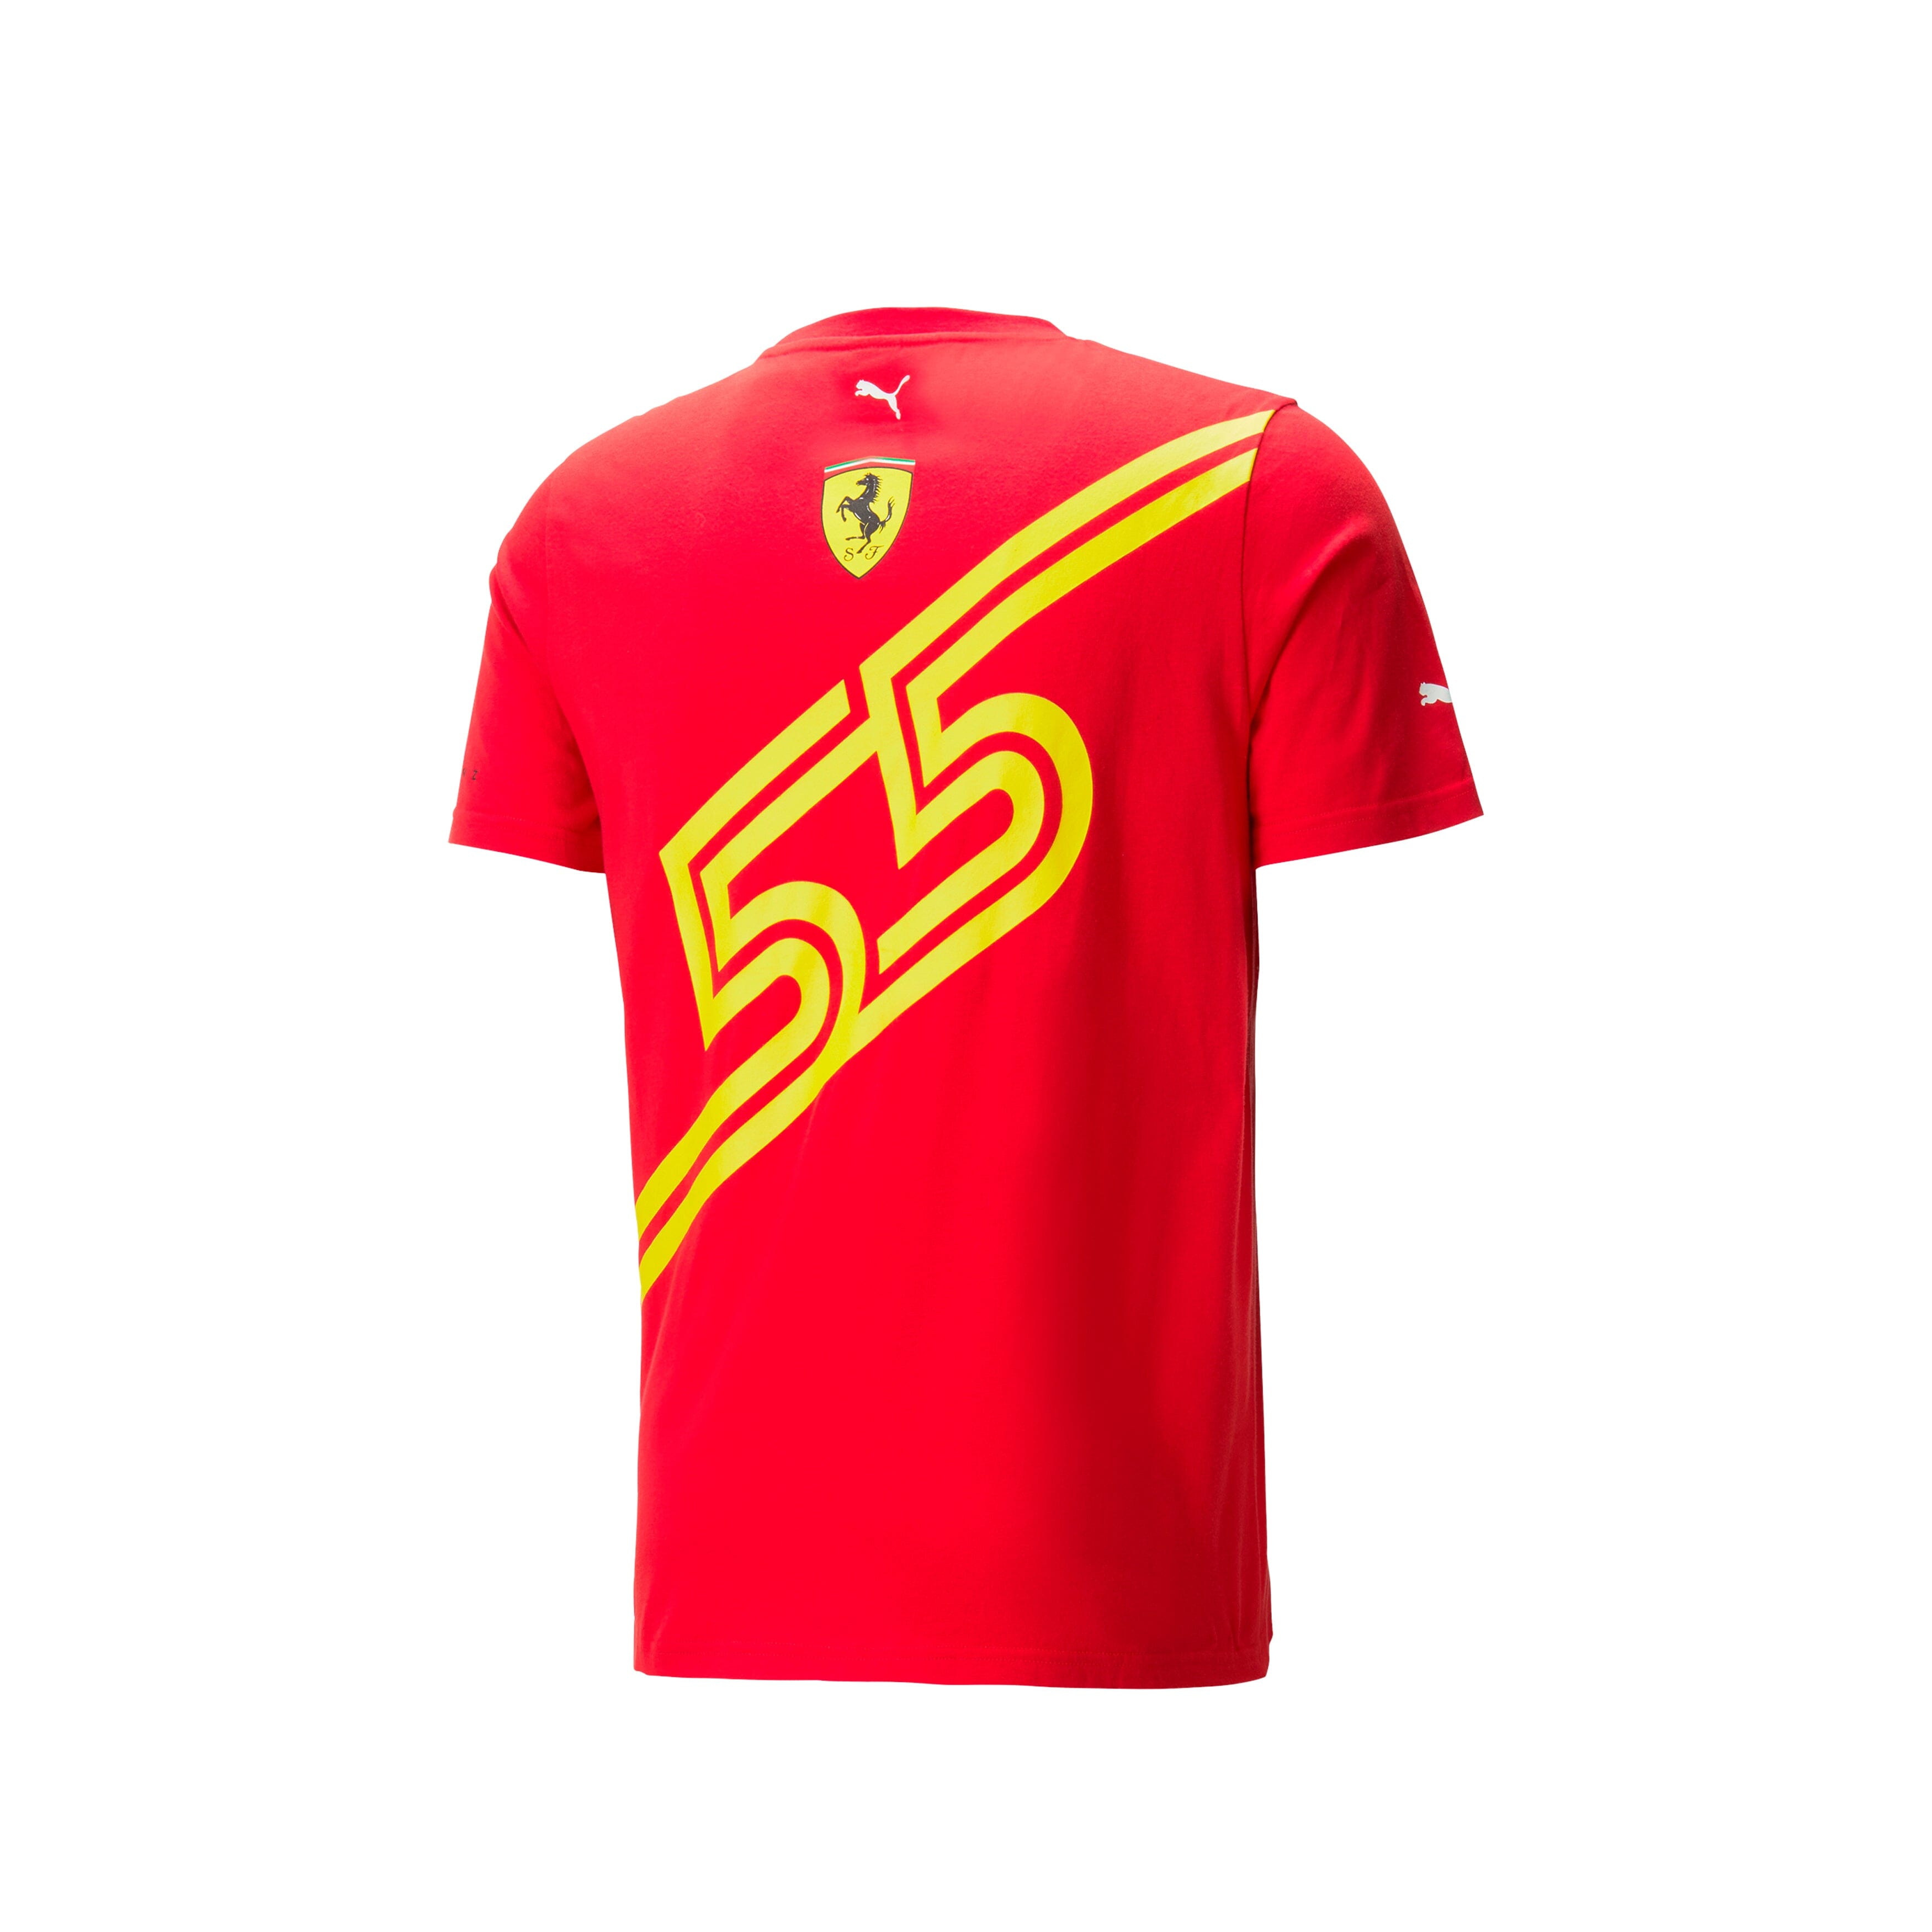 Scuderia Ferrari F1 Carlos Sainz Special Edition Spain GP T-Shirt - Red